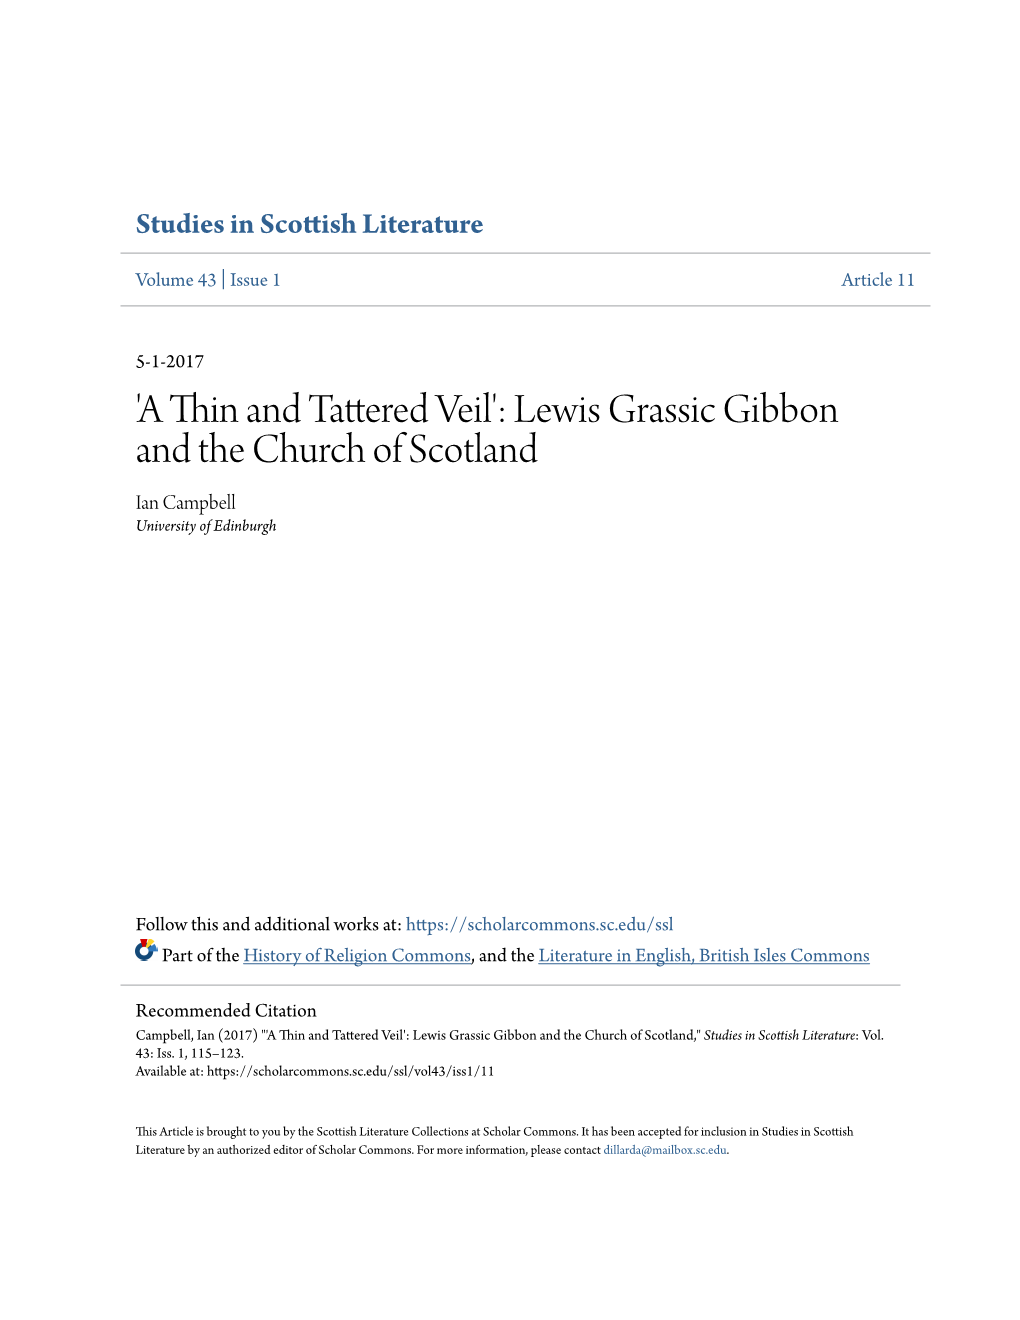 Lewis Grassic Gibbon and the Church of Scotland Ian Campbell University of Edinburgh